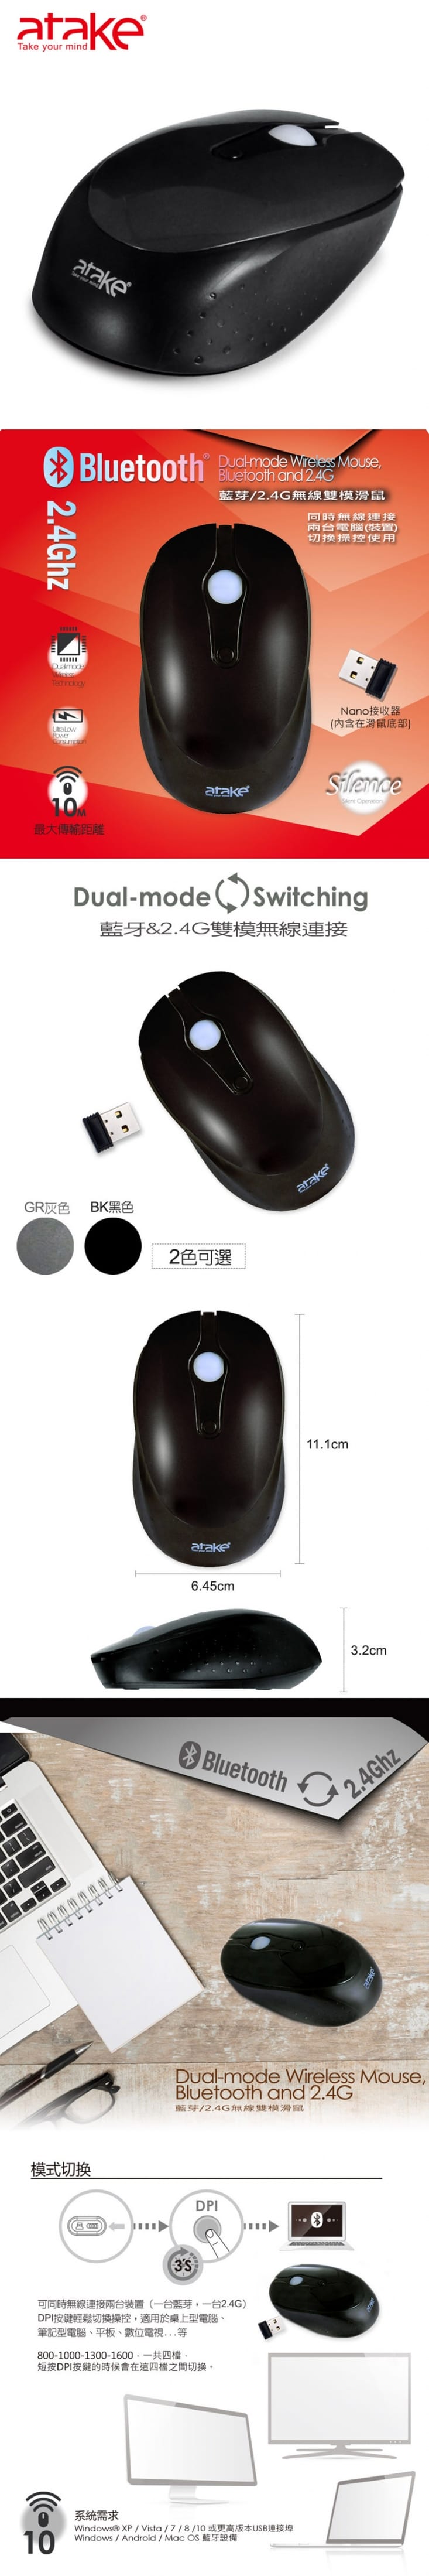 ATake-2.4G/藍芽雙模無線滑鼠DE1-K04